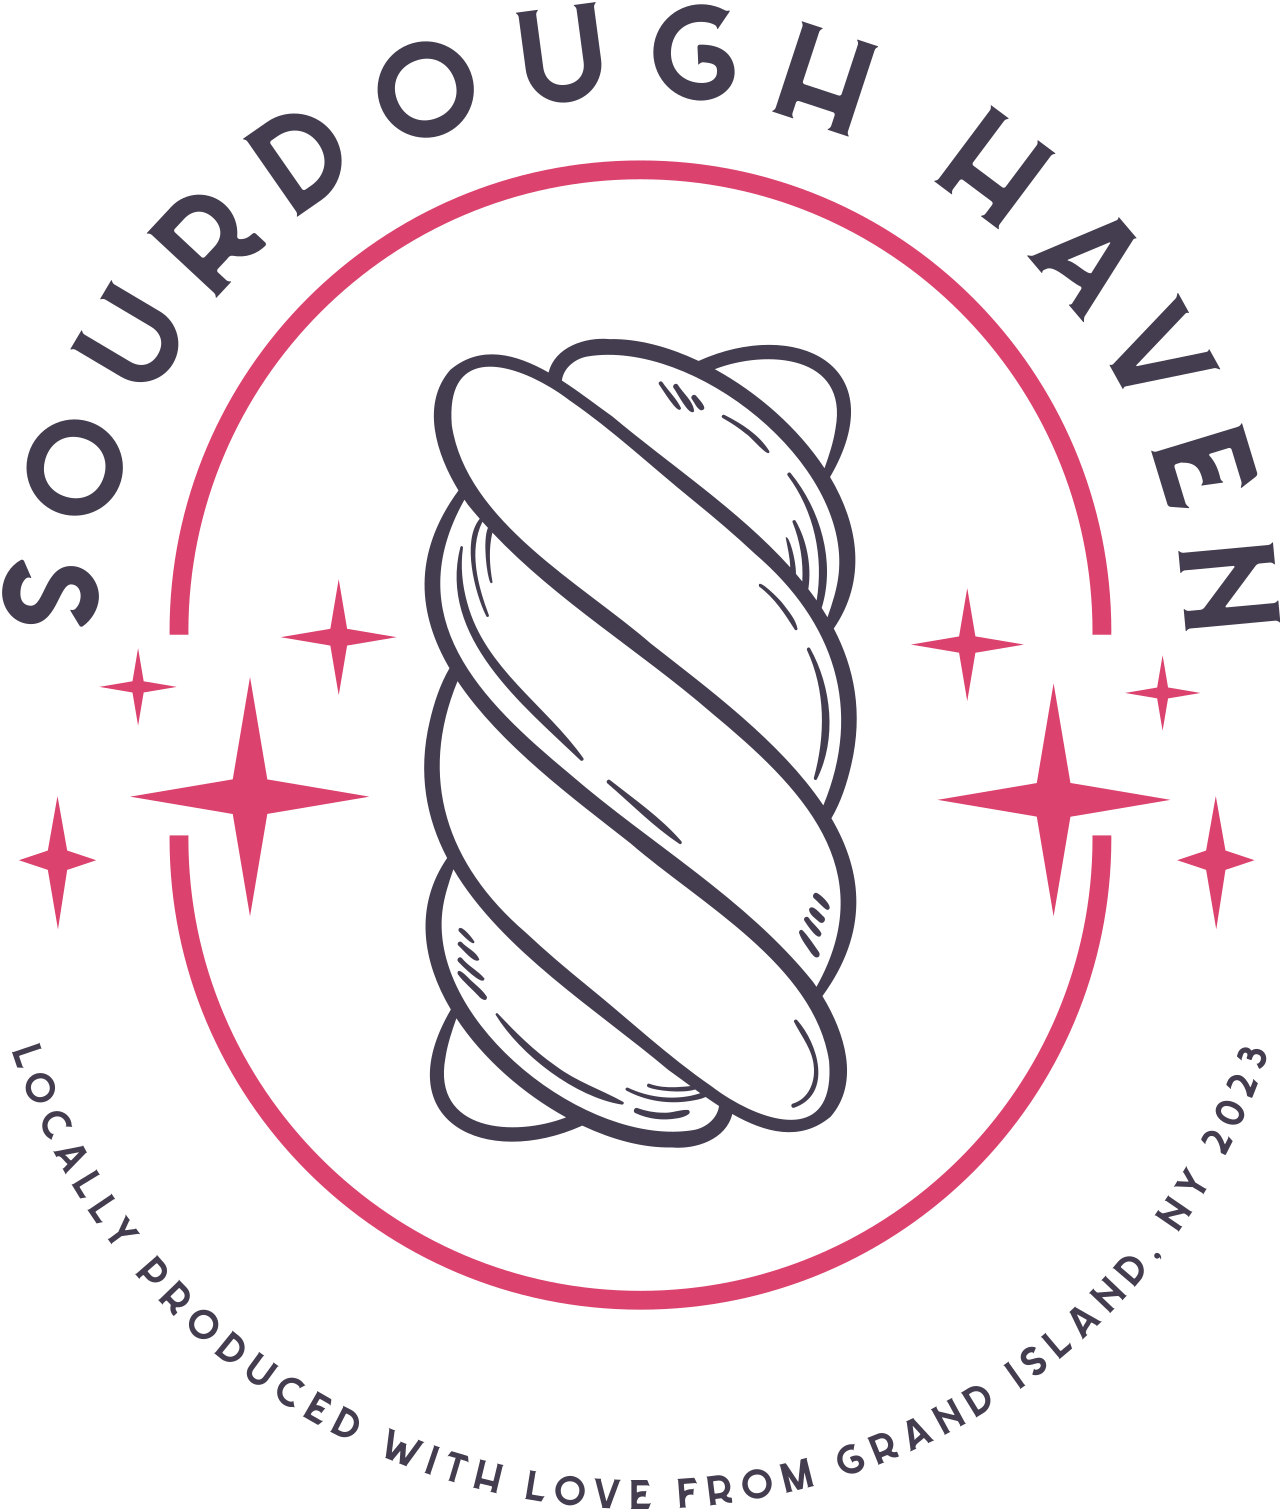 Sourdough Haven's logo